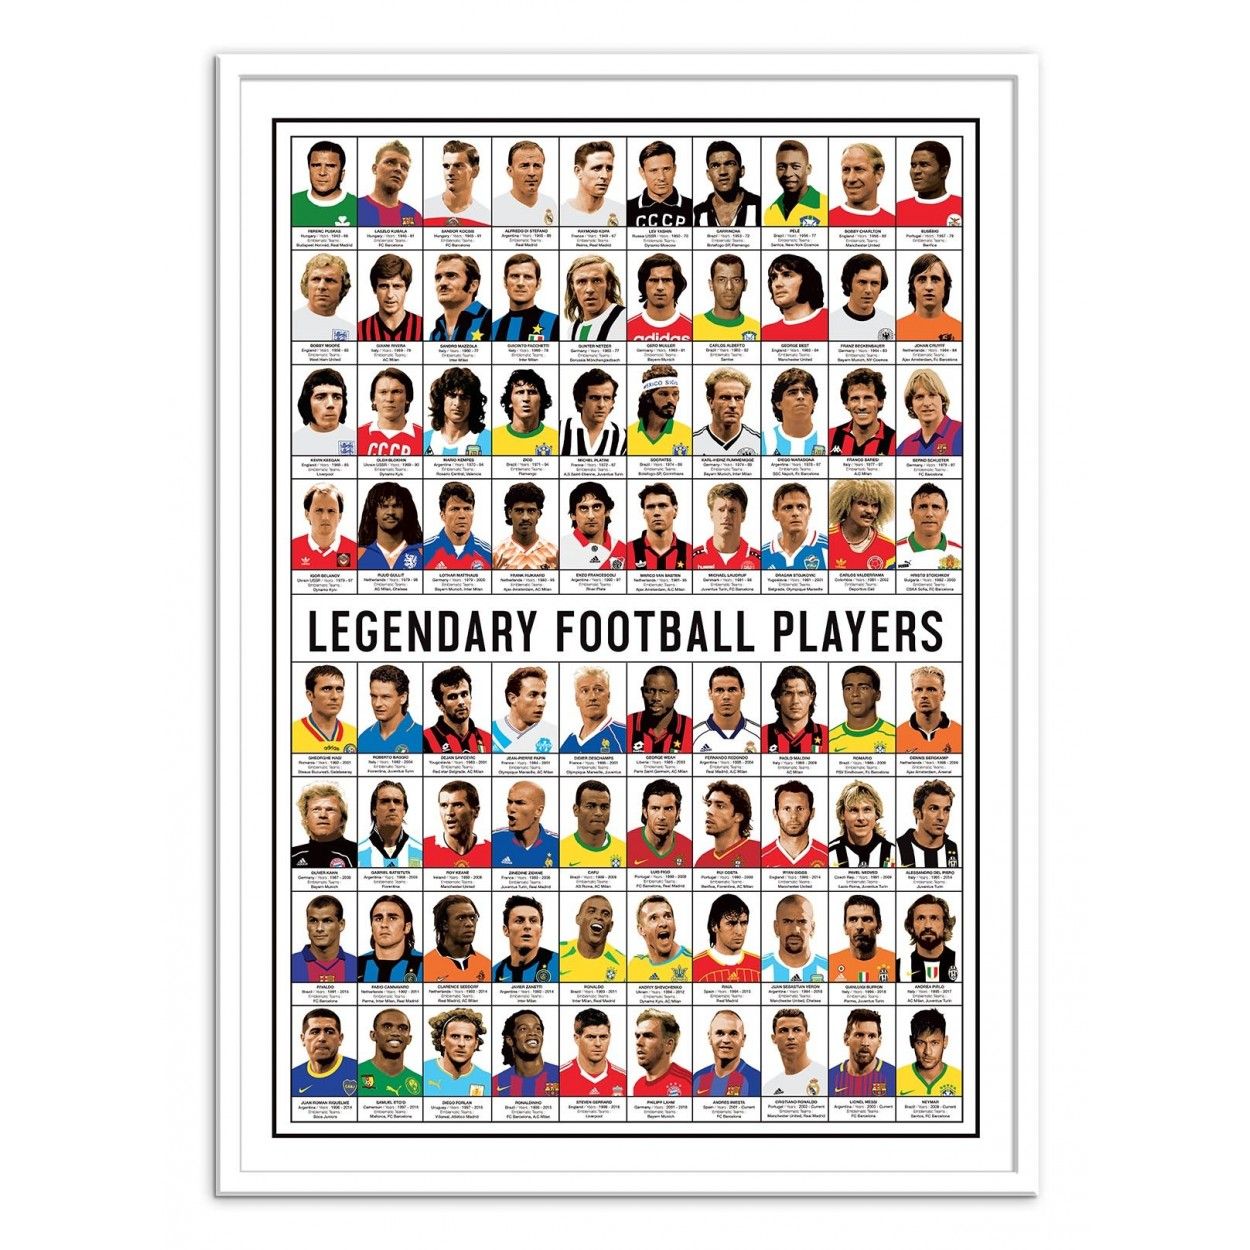 Legendary Football Players Art Poster By Olivier Bourdereau (50 x 70 cm)